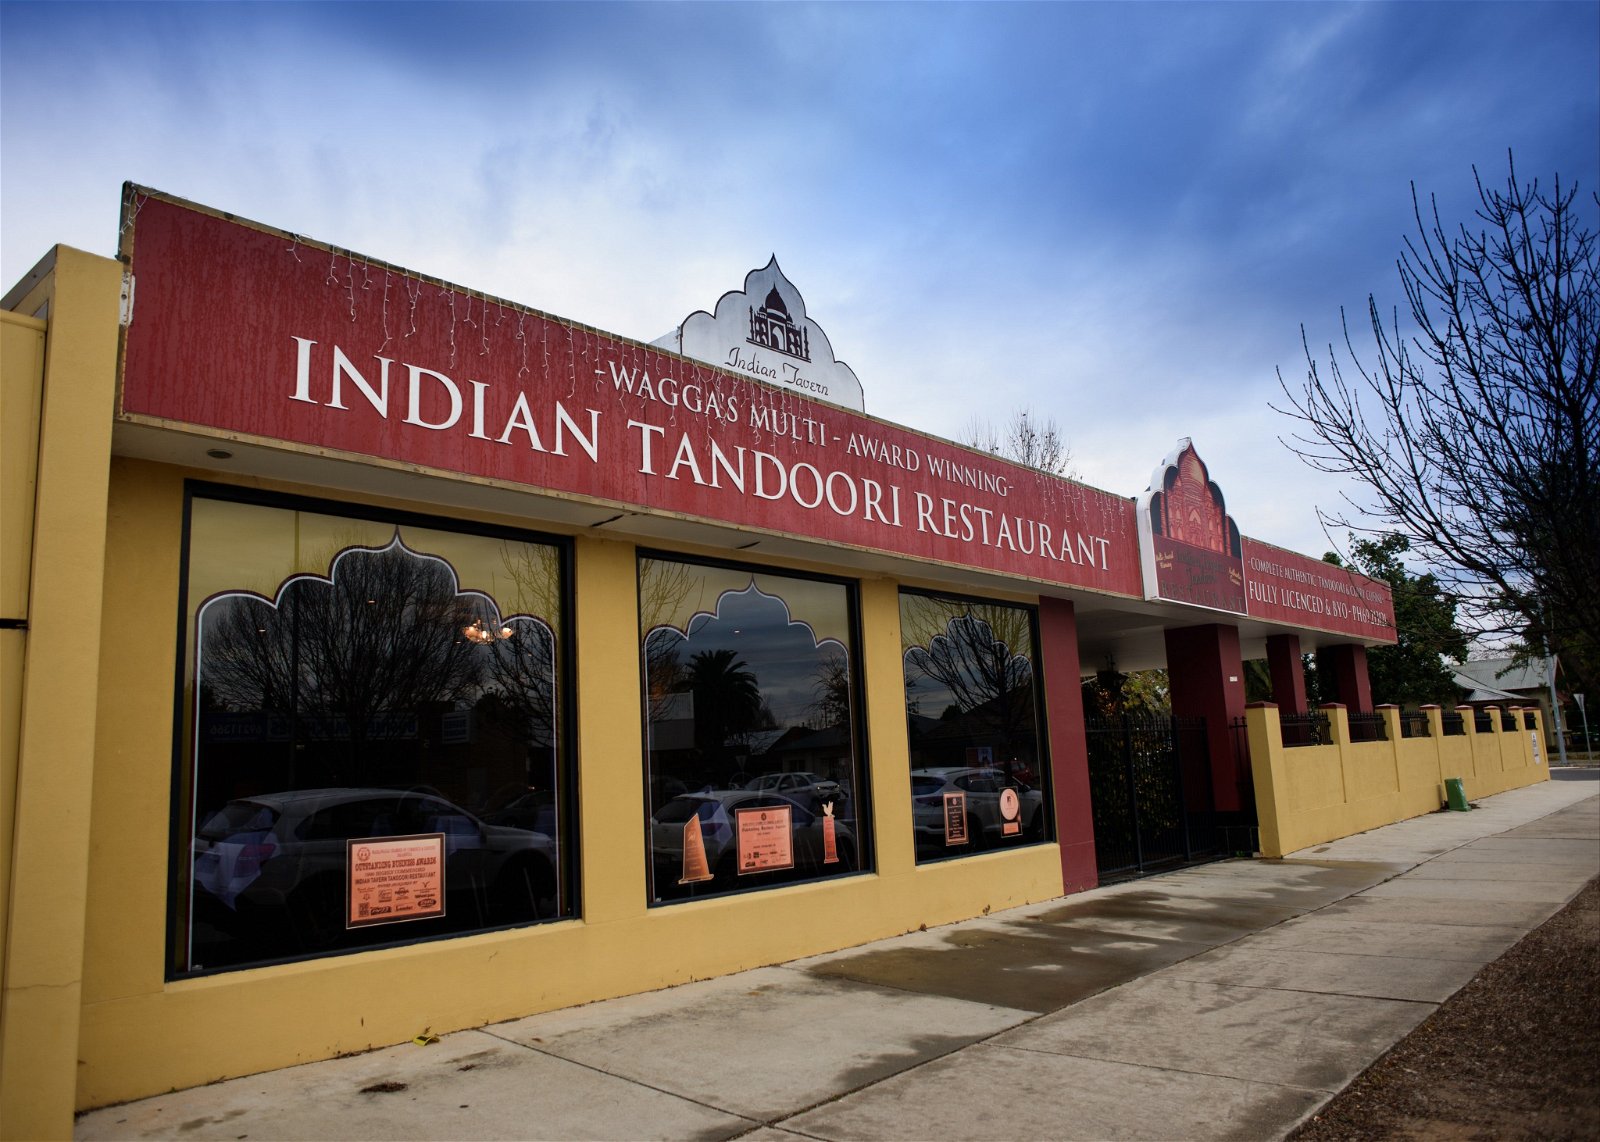 Indian Tavern Tandoori - Wagga Wagga Accommodation